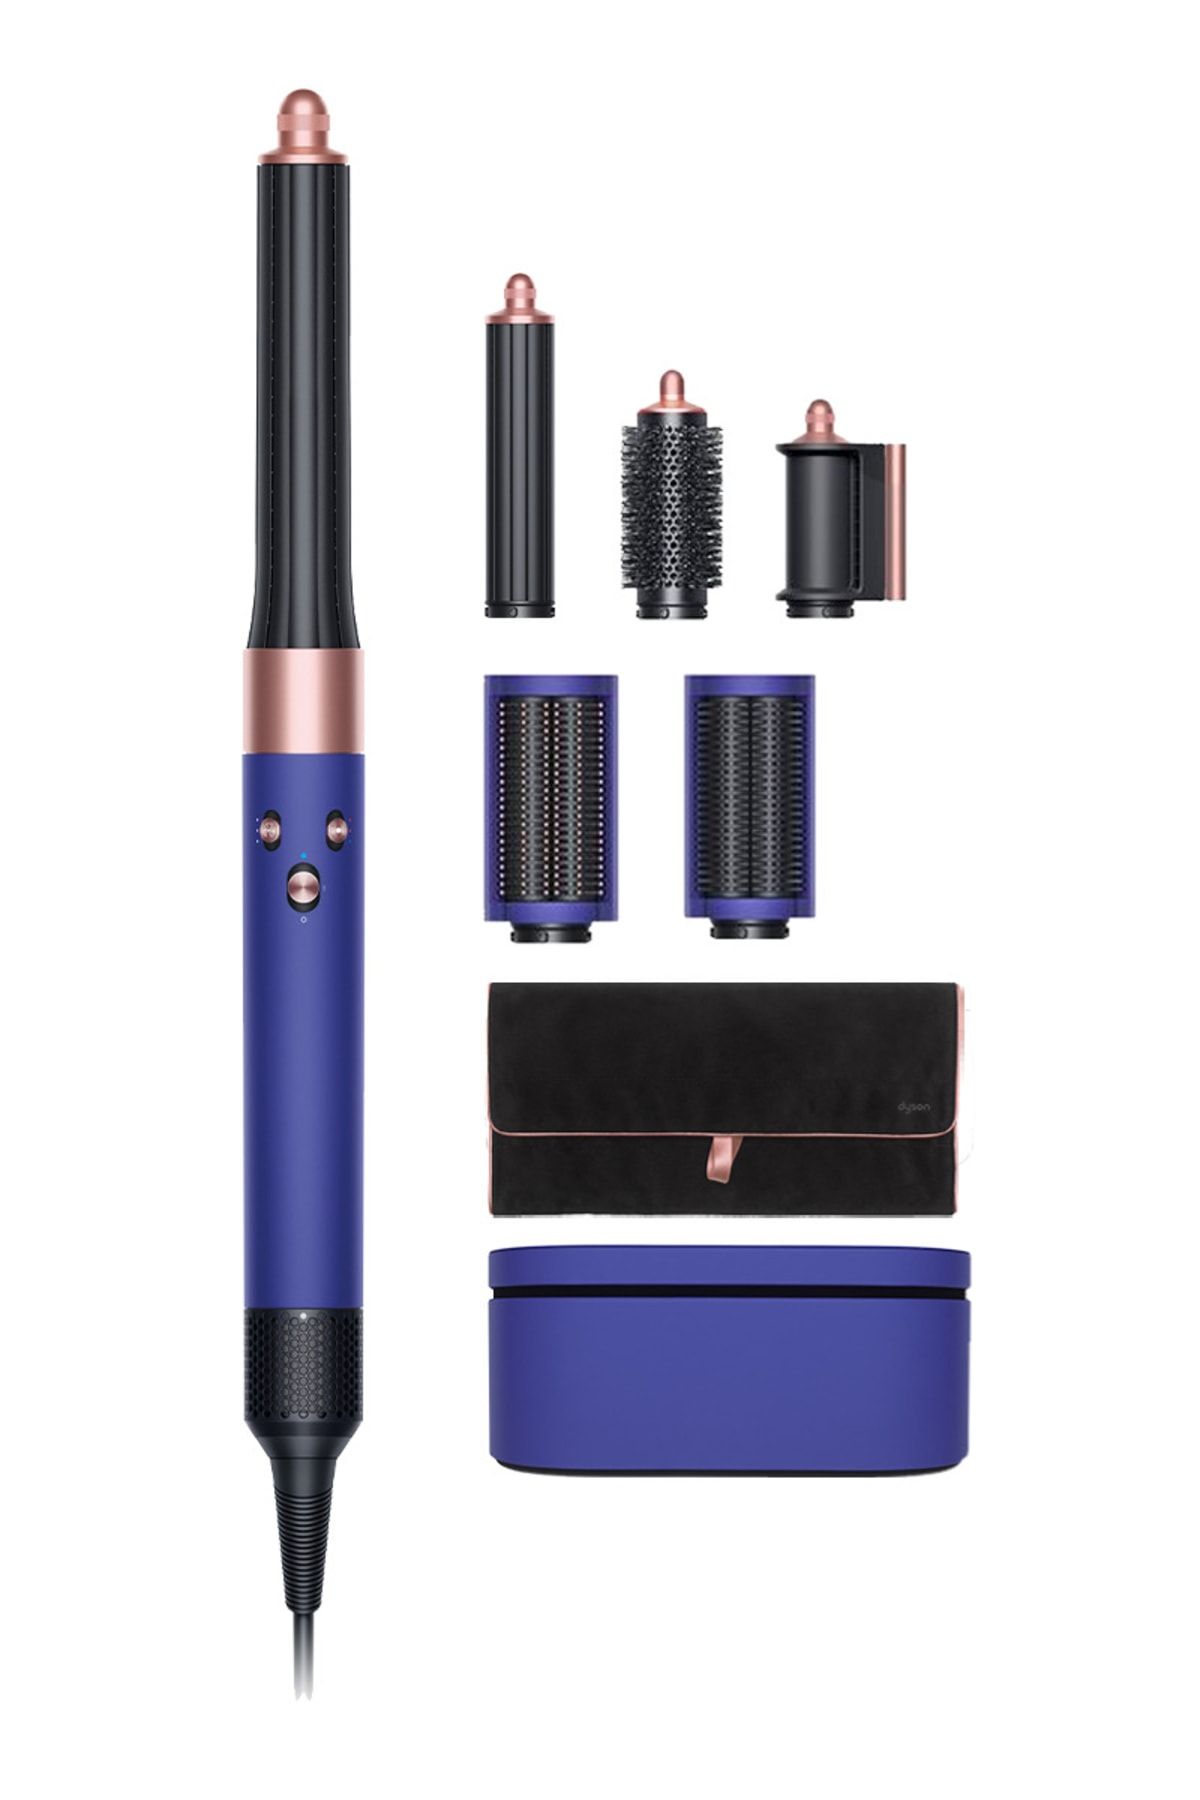 DYSON Airwrap™ Multi-Styler Complete Uzun Saç Şekillendirici (Vinca mavisi/Rosé)